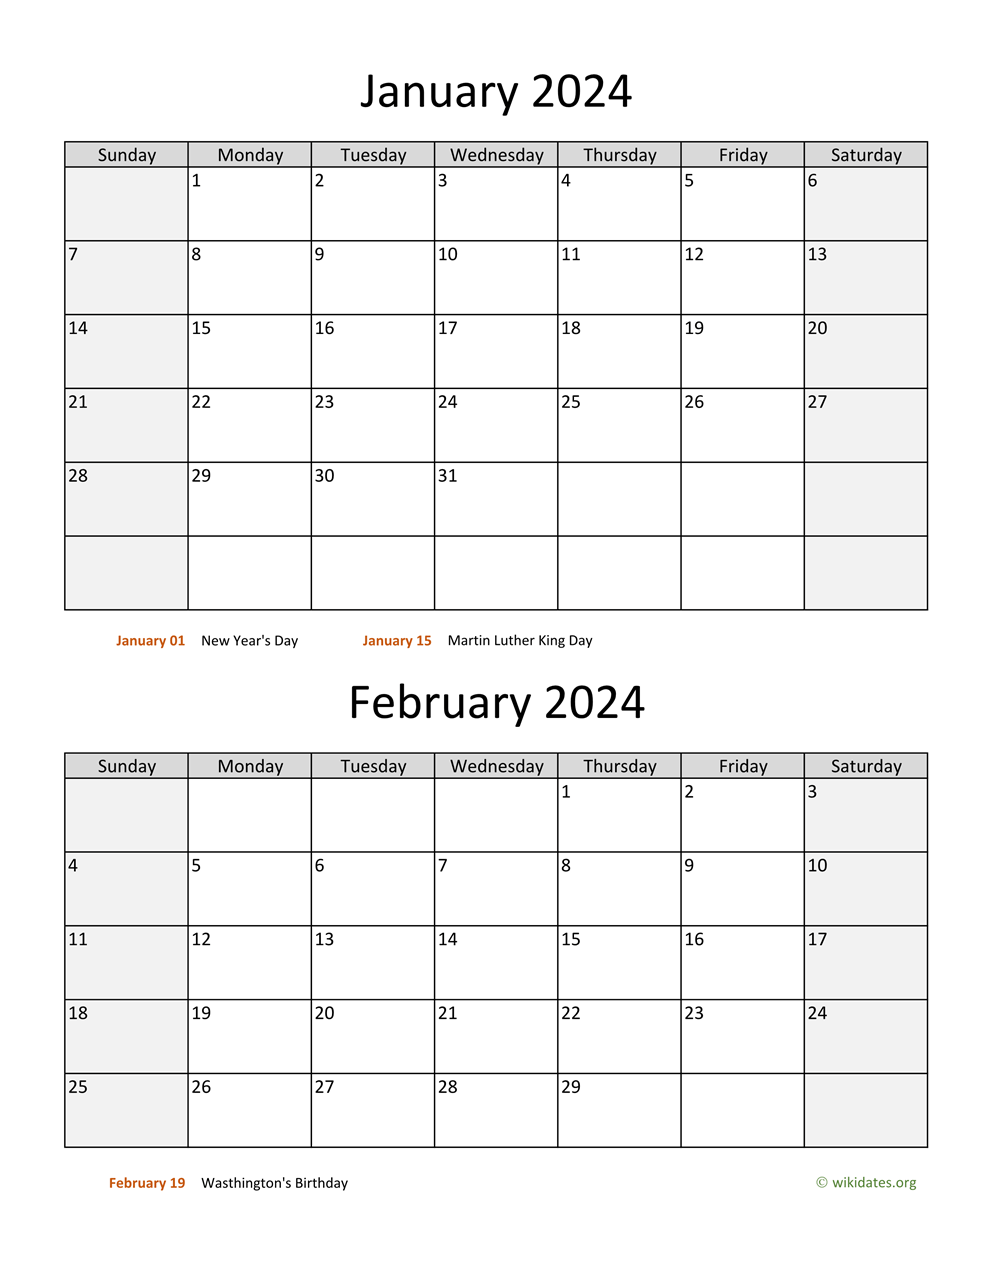 January and February 2024 Calendar WikiDates org